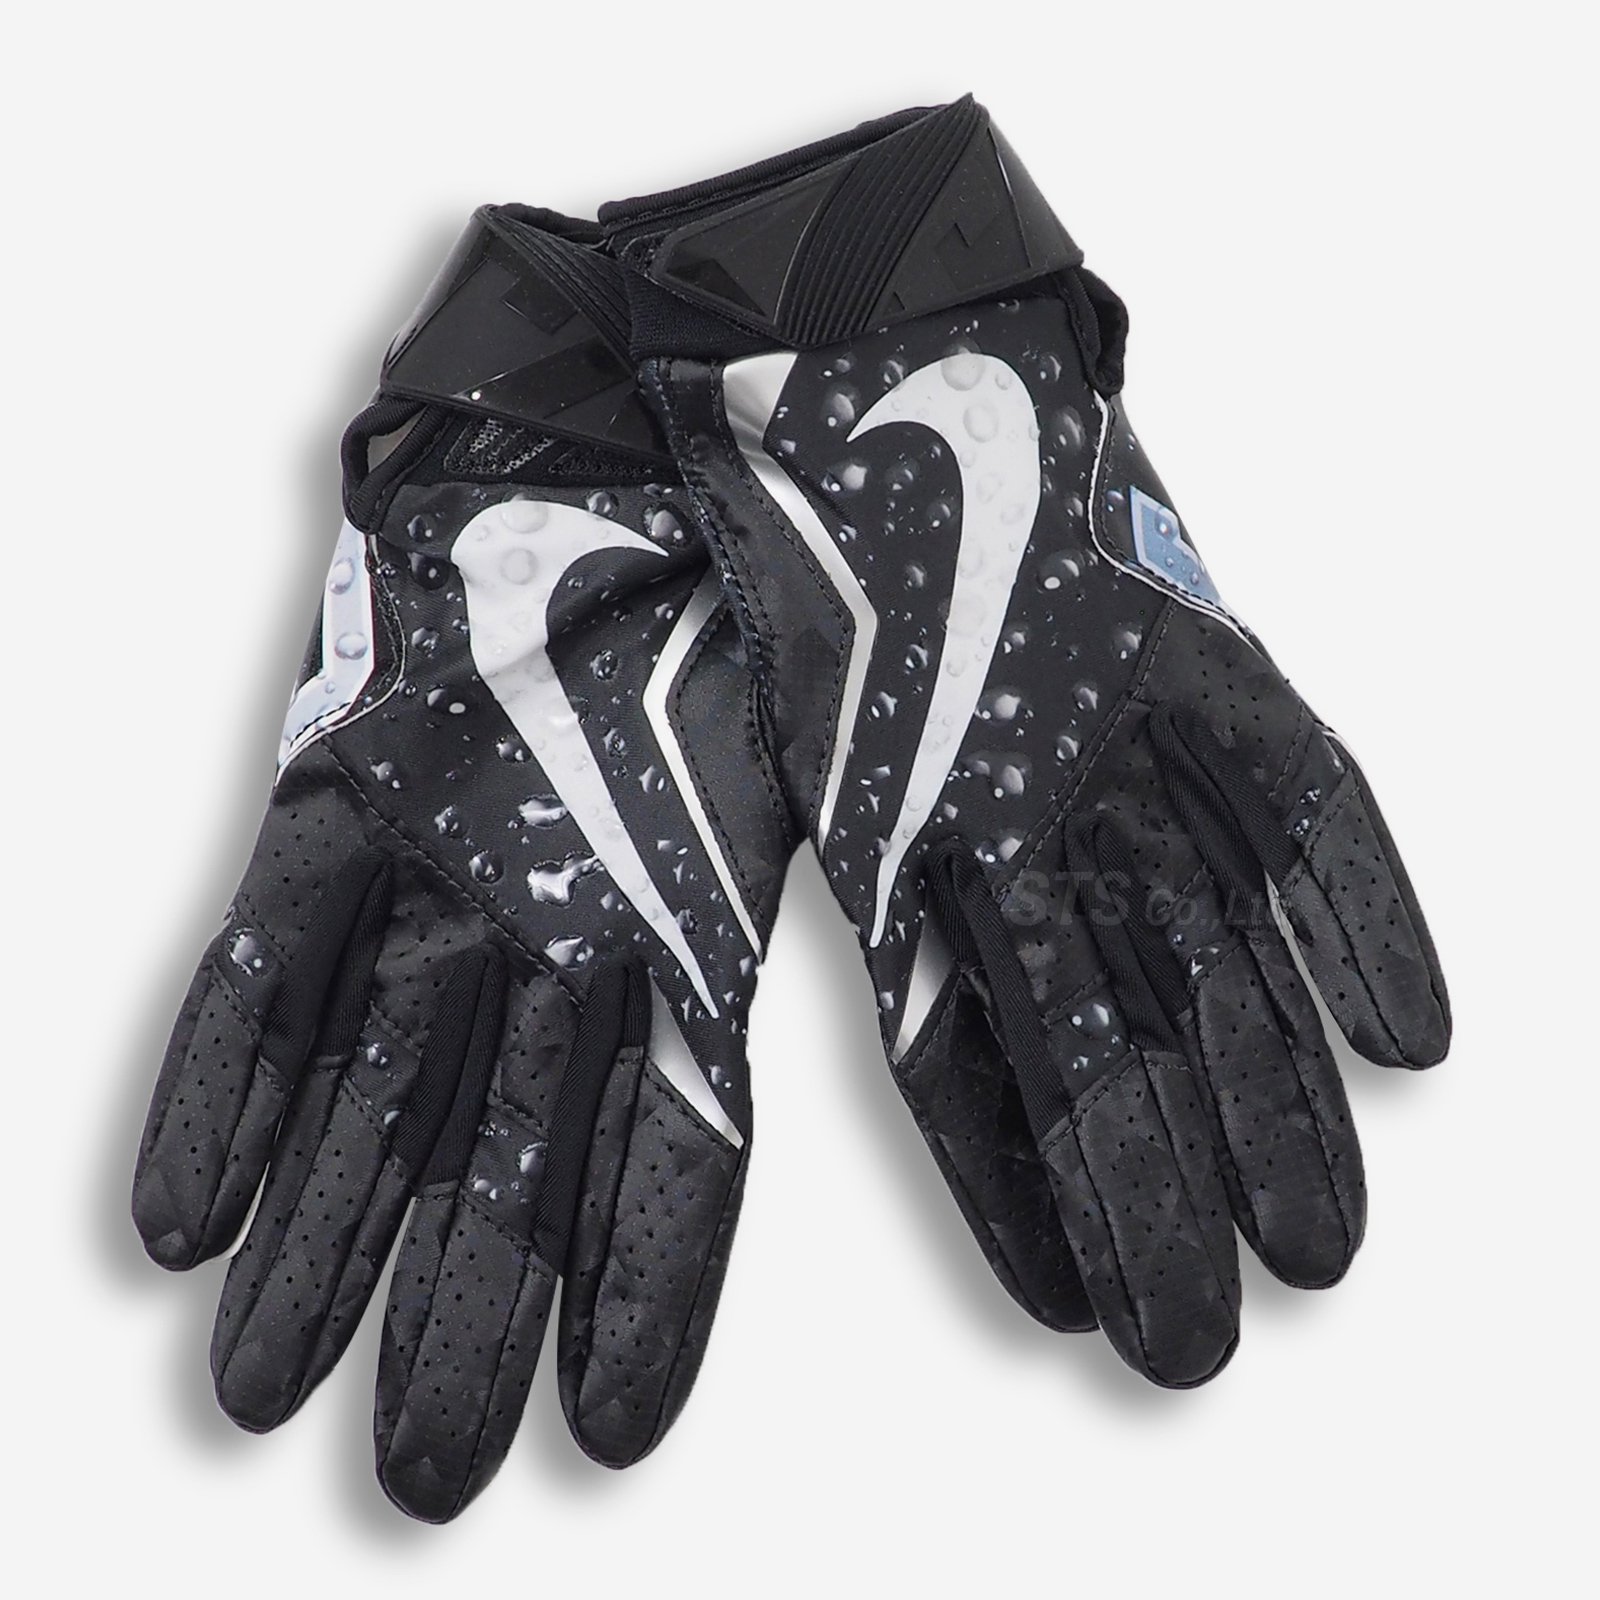 XL Supreme Nike Vapor Jet Gloves